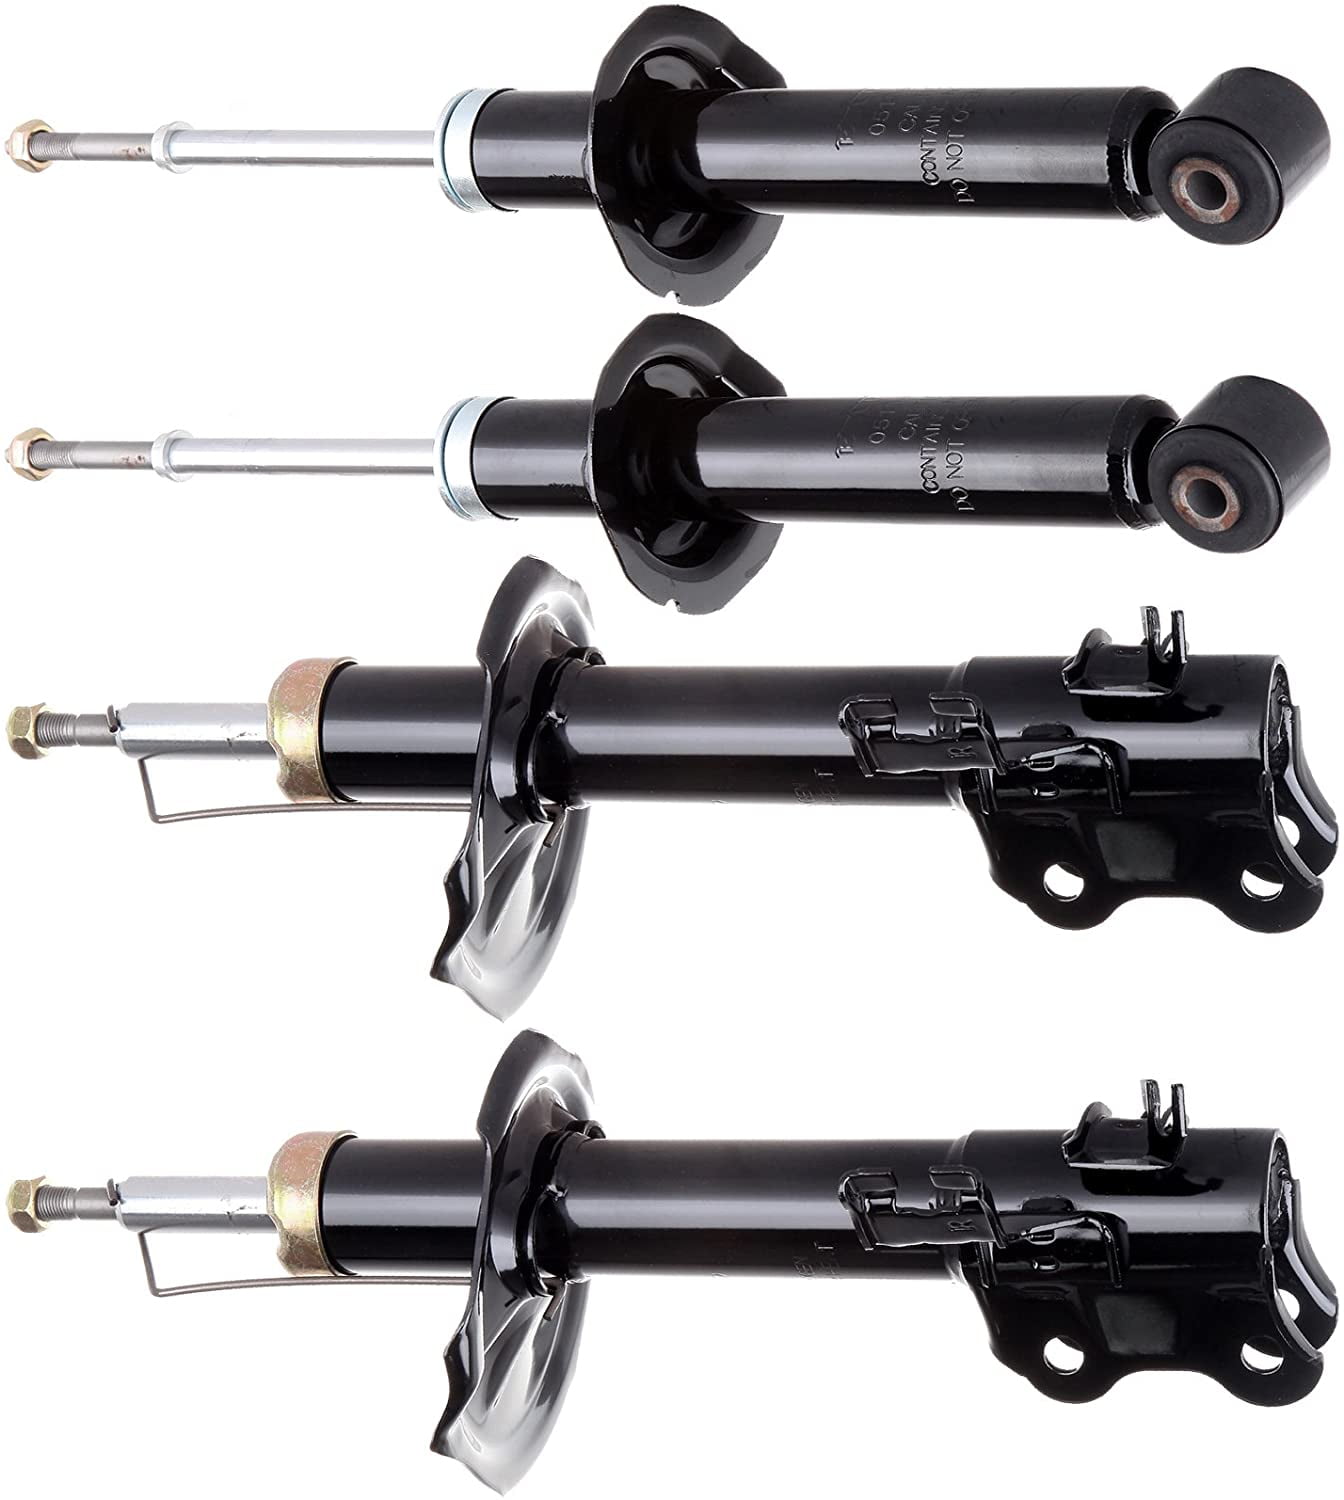 Shocks Struts,ECCPP Front Rear Shock Absorbers Strut Kits Compatible with 2002 2003 2004 Infiniti I35,2001 2002 2003 Nissan Maxima 334366 71461 334367 71462 341341 71327 